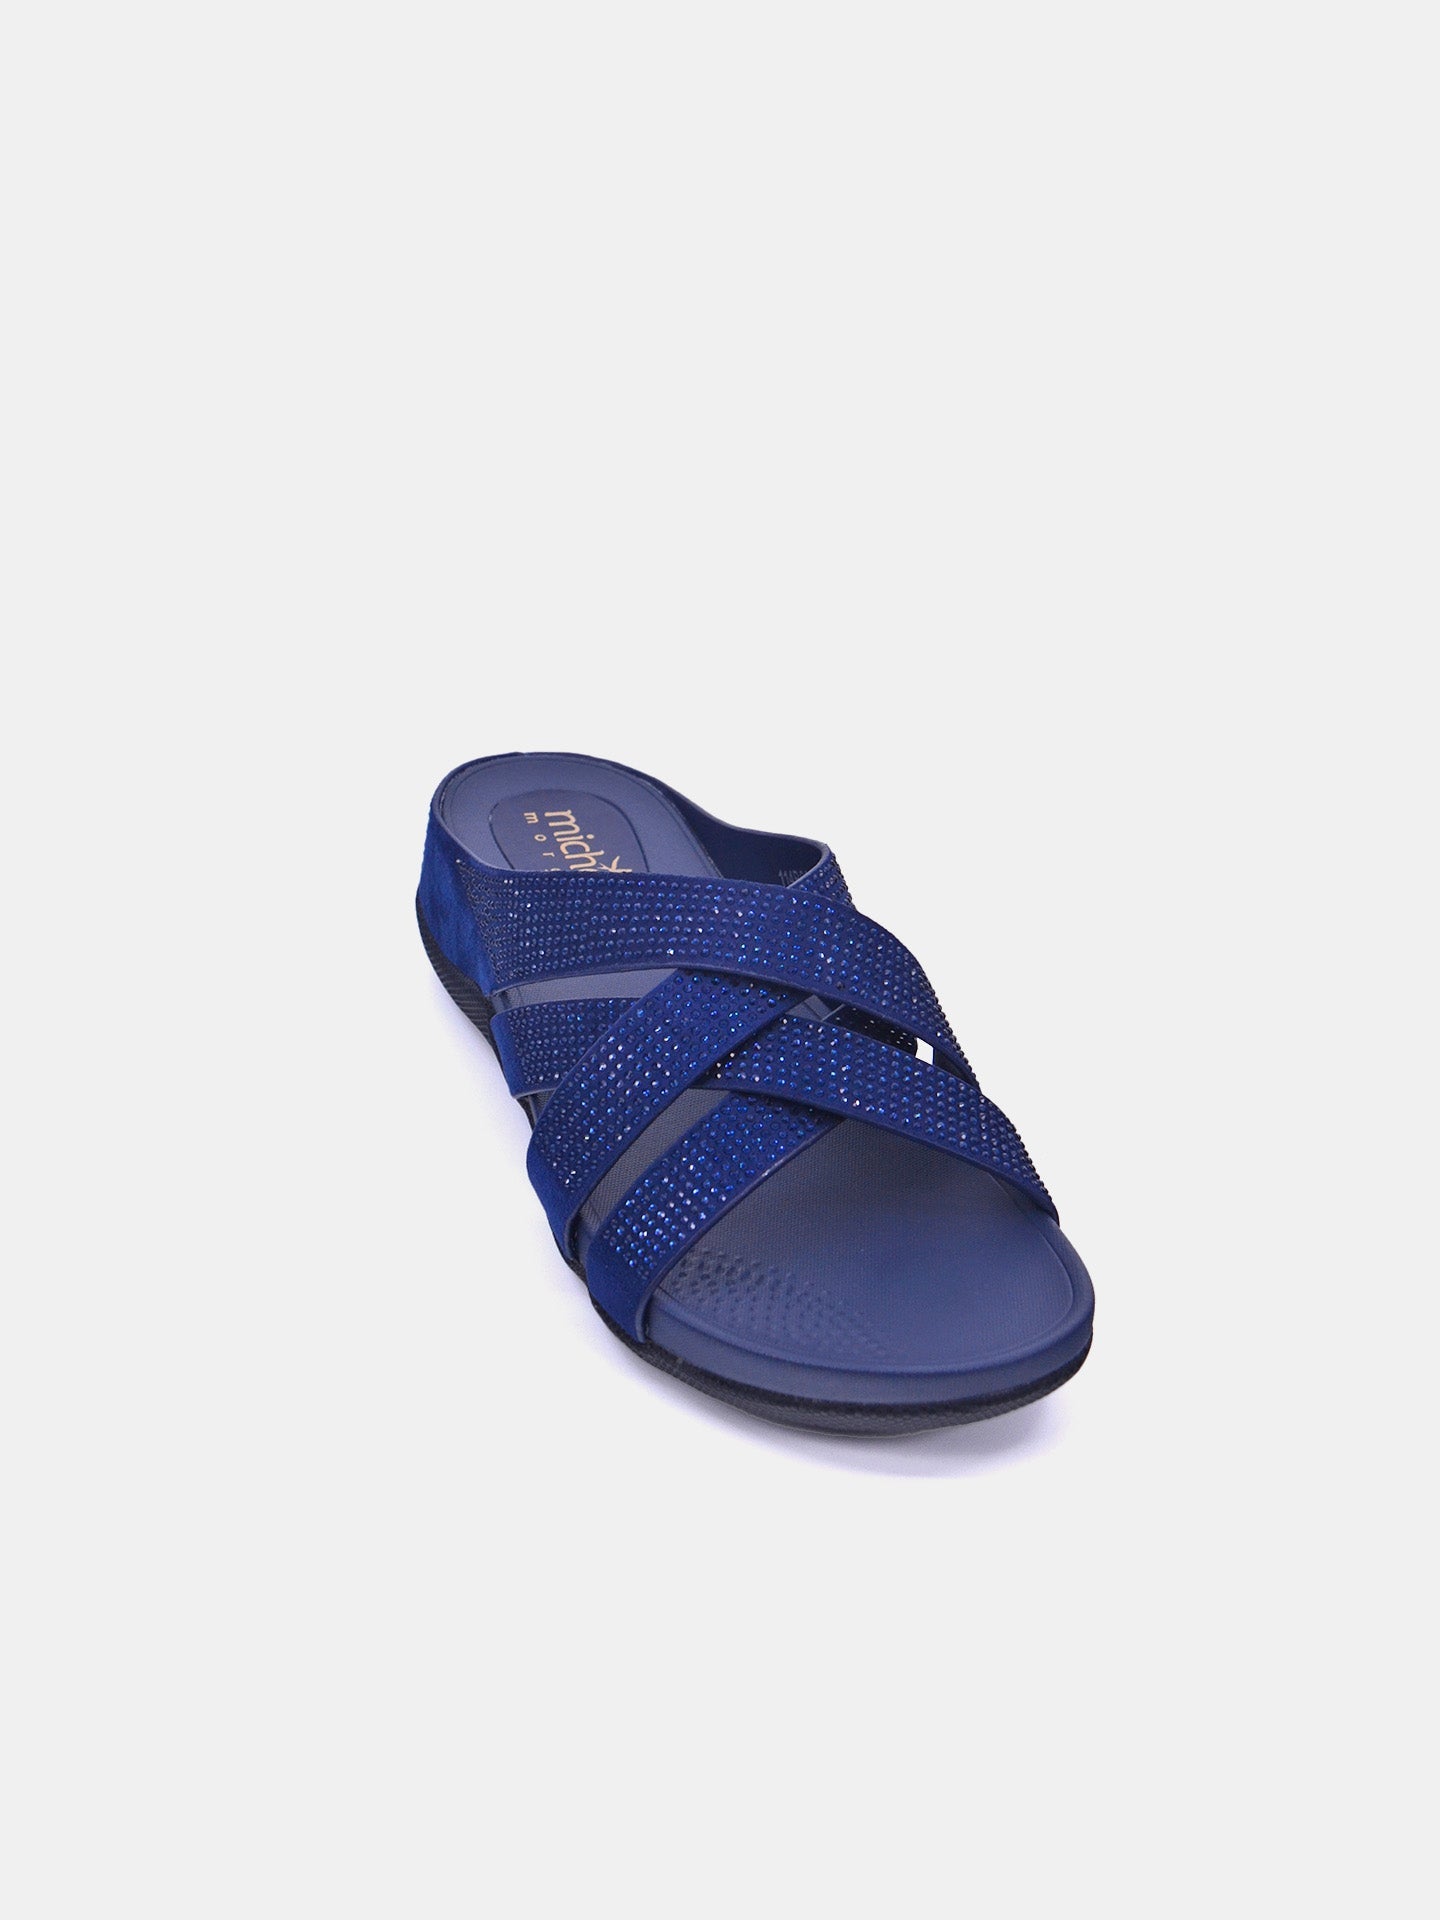 Michelle Morgan 114RC278 Women's Casual Sandals #color_Navy